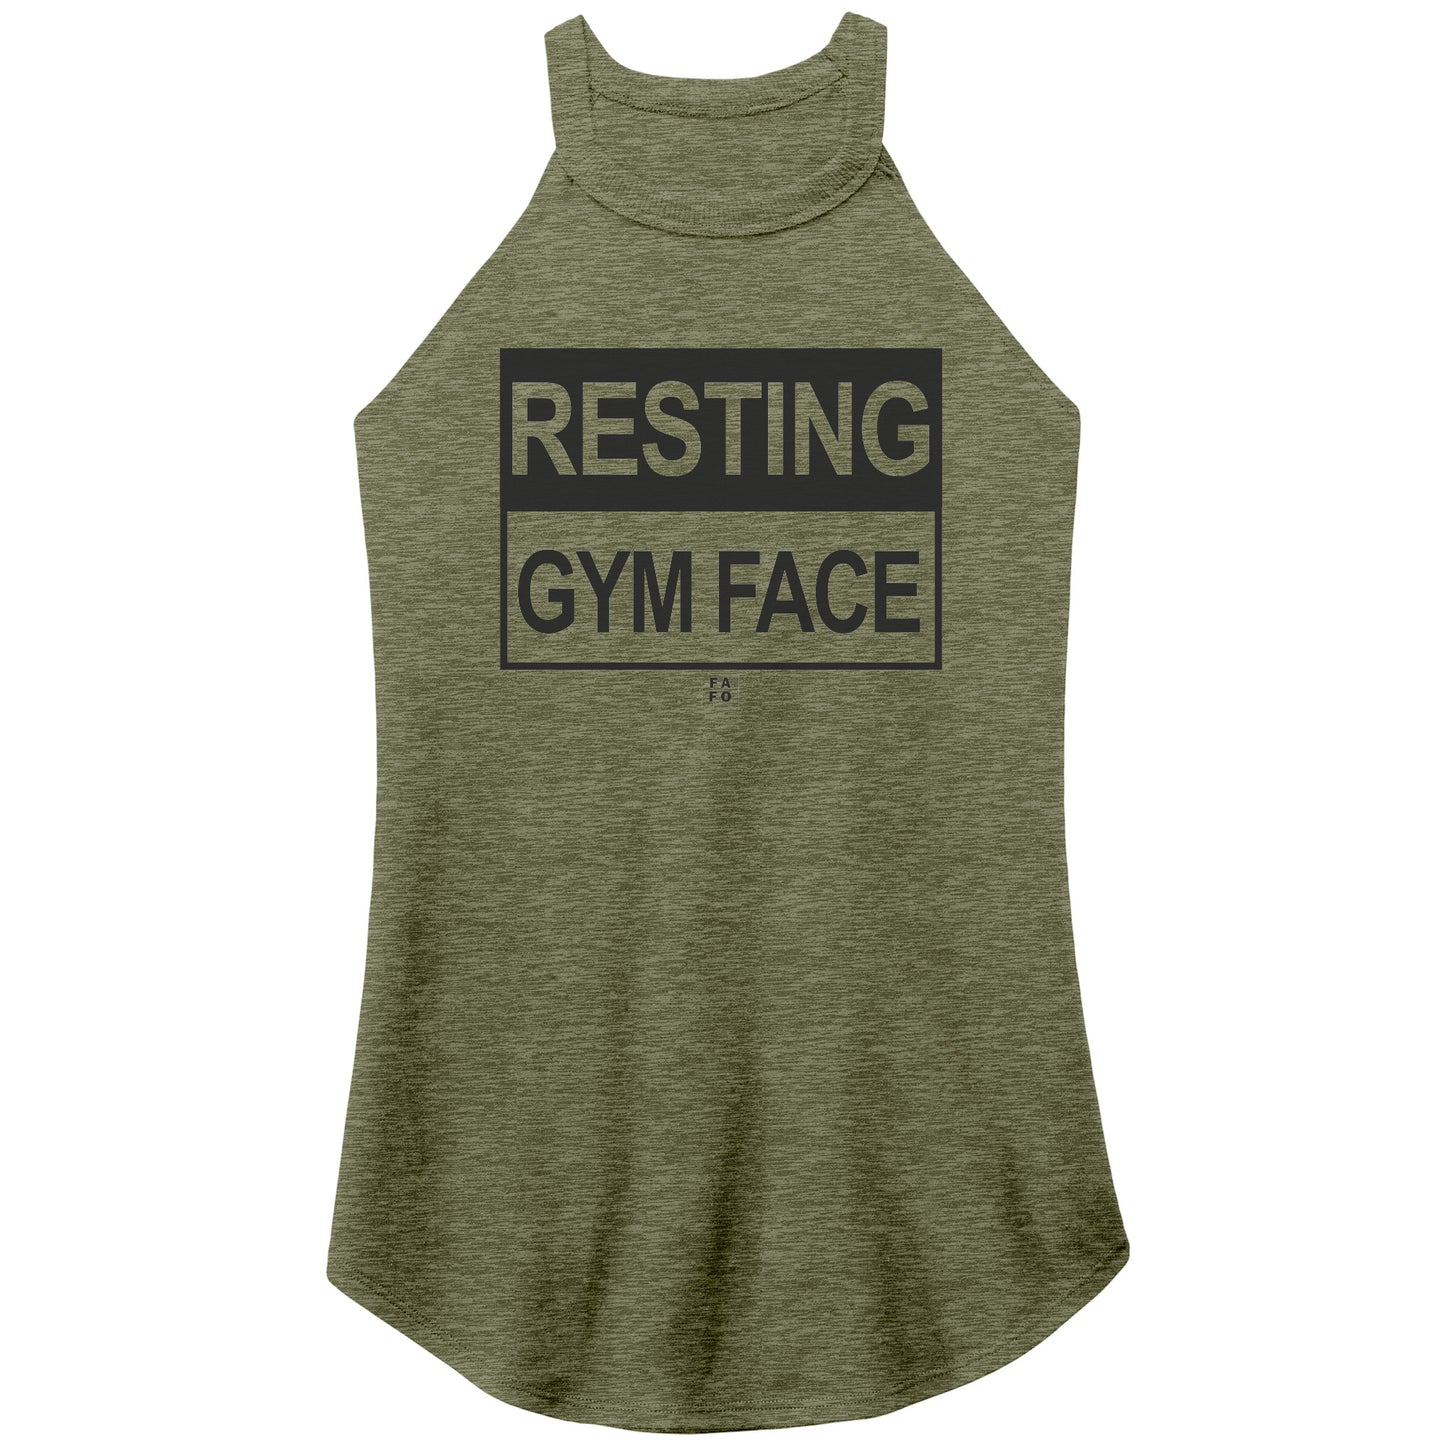 Rocker Tank - Resting Gym Face - Army Green - FAFO Sportswear